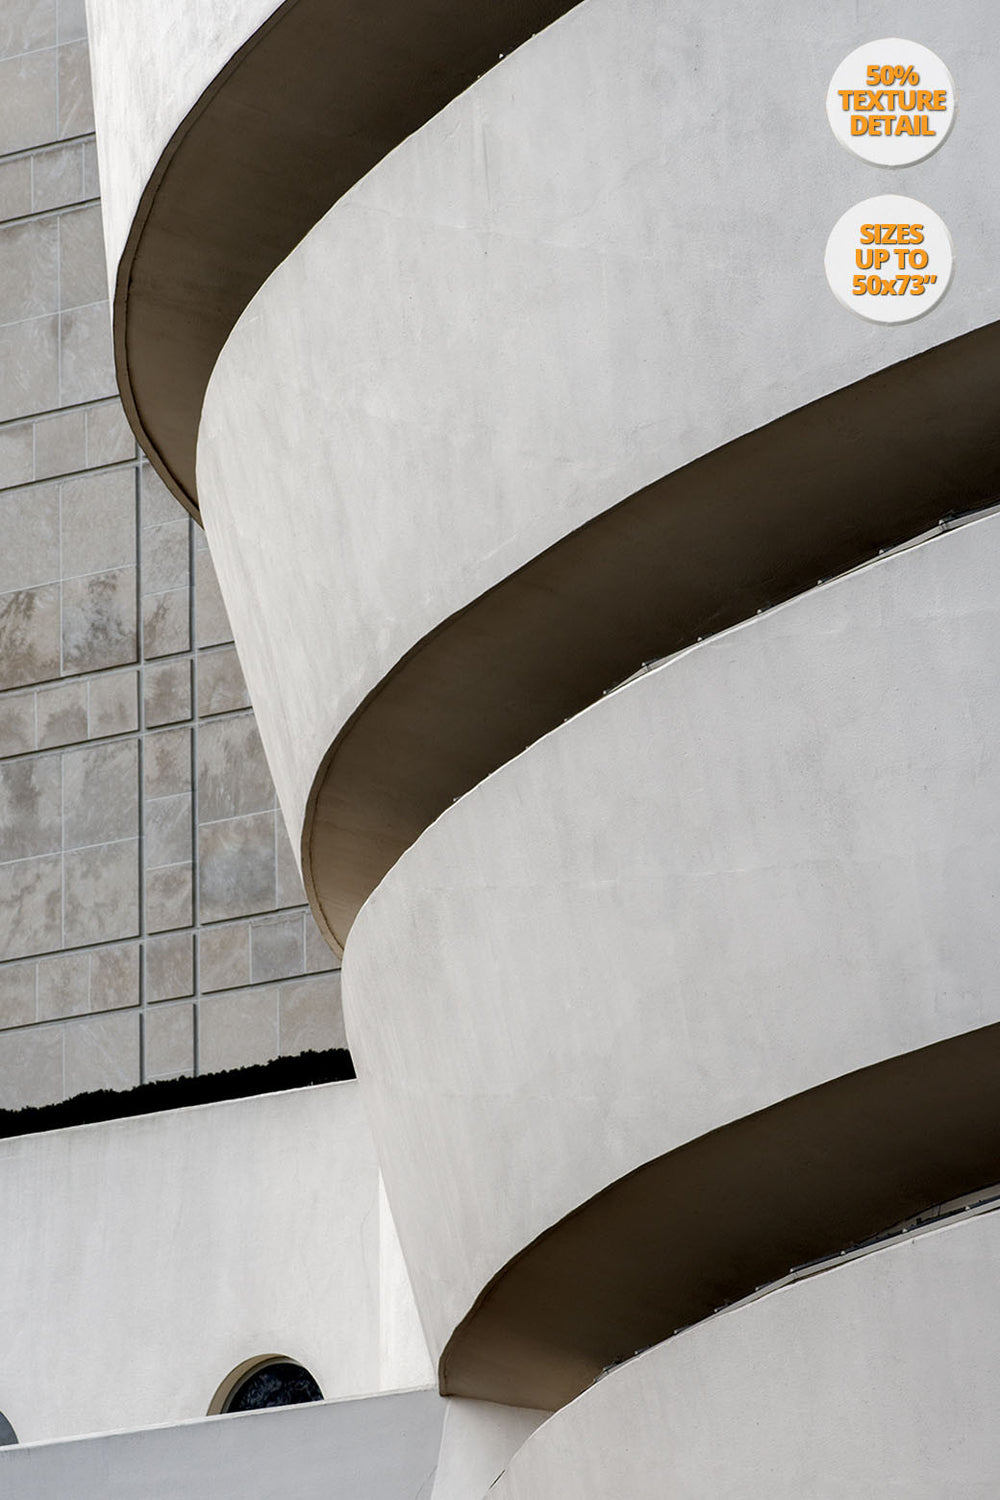 Facade of Guggenheim Museum, New York. | 50% Magnification Detail.